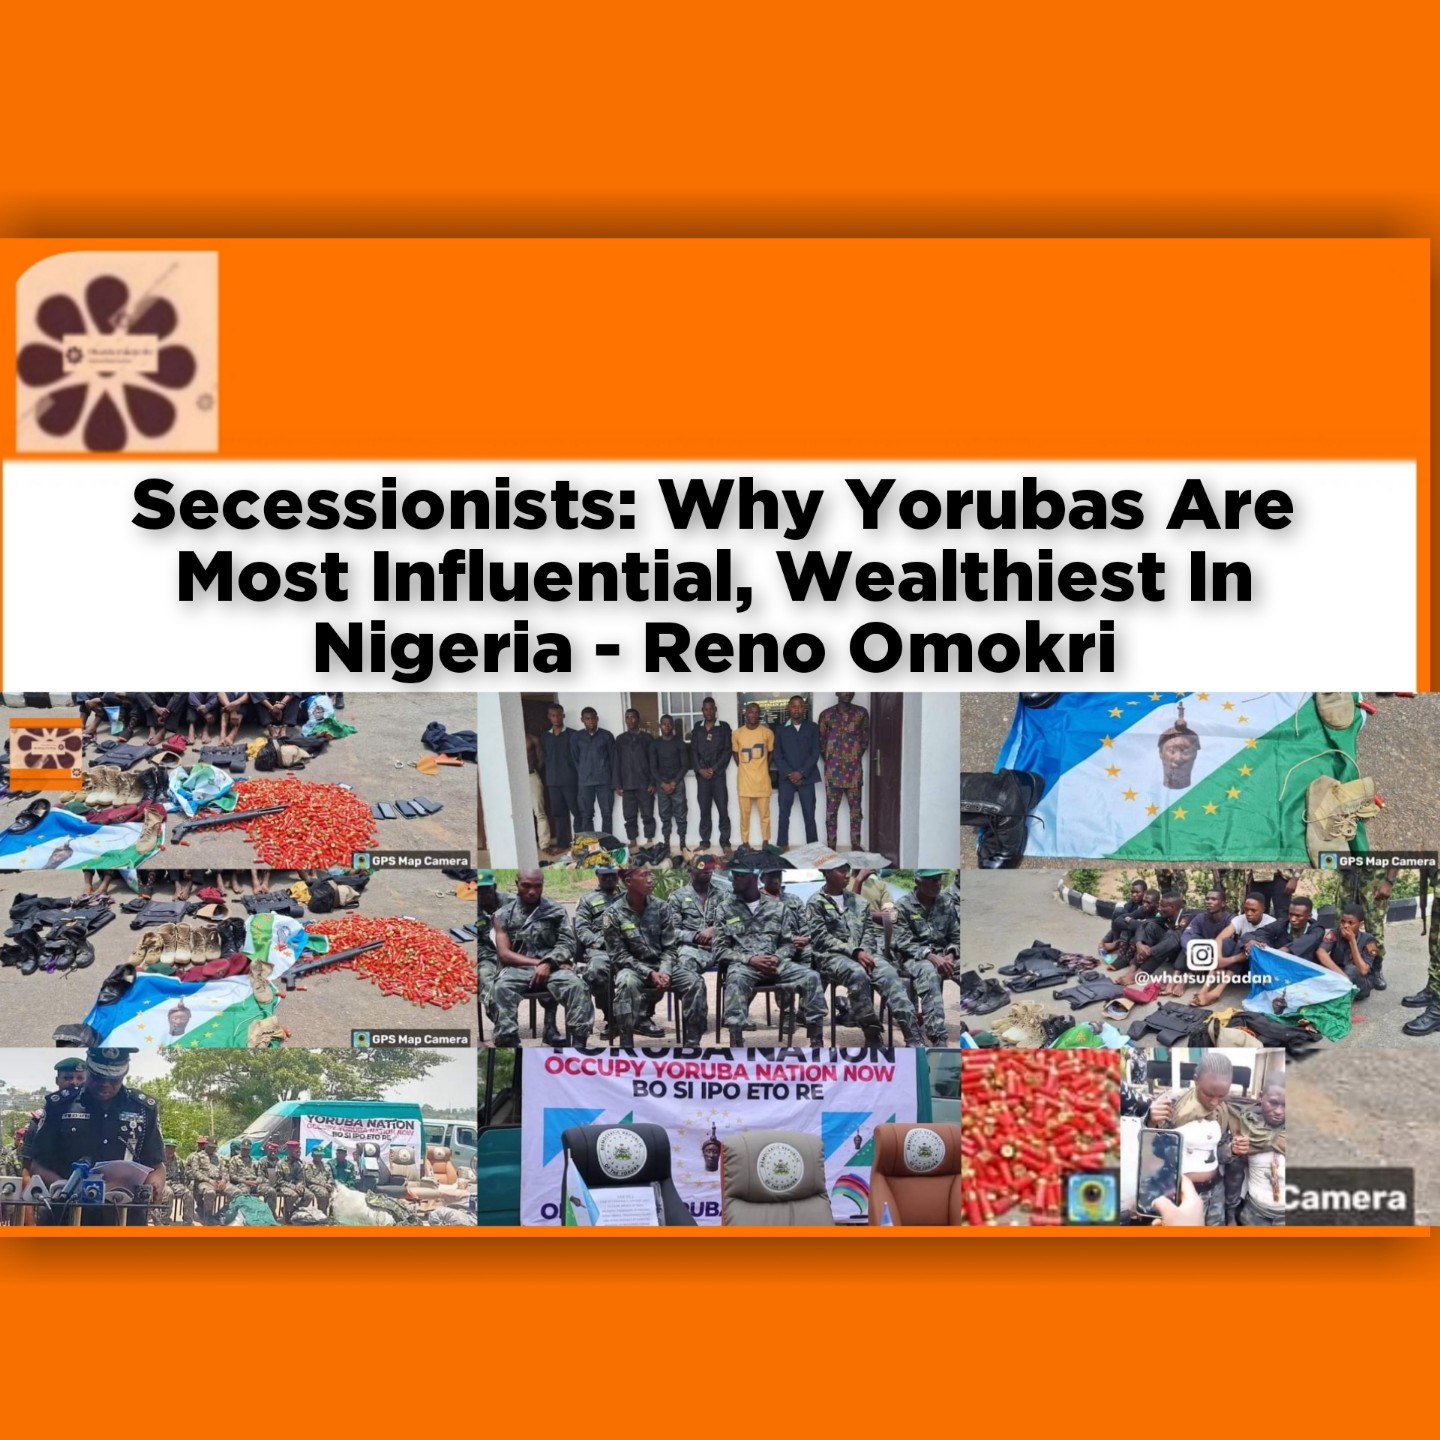 Secessionists: Why Yorubas Are Most Influential, Wealthiest In Nigeria - Reno Omokri ~ OsazuwaAkonedo #military